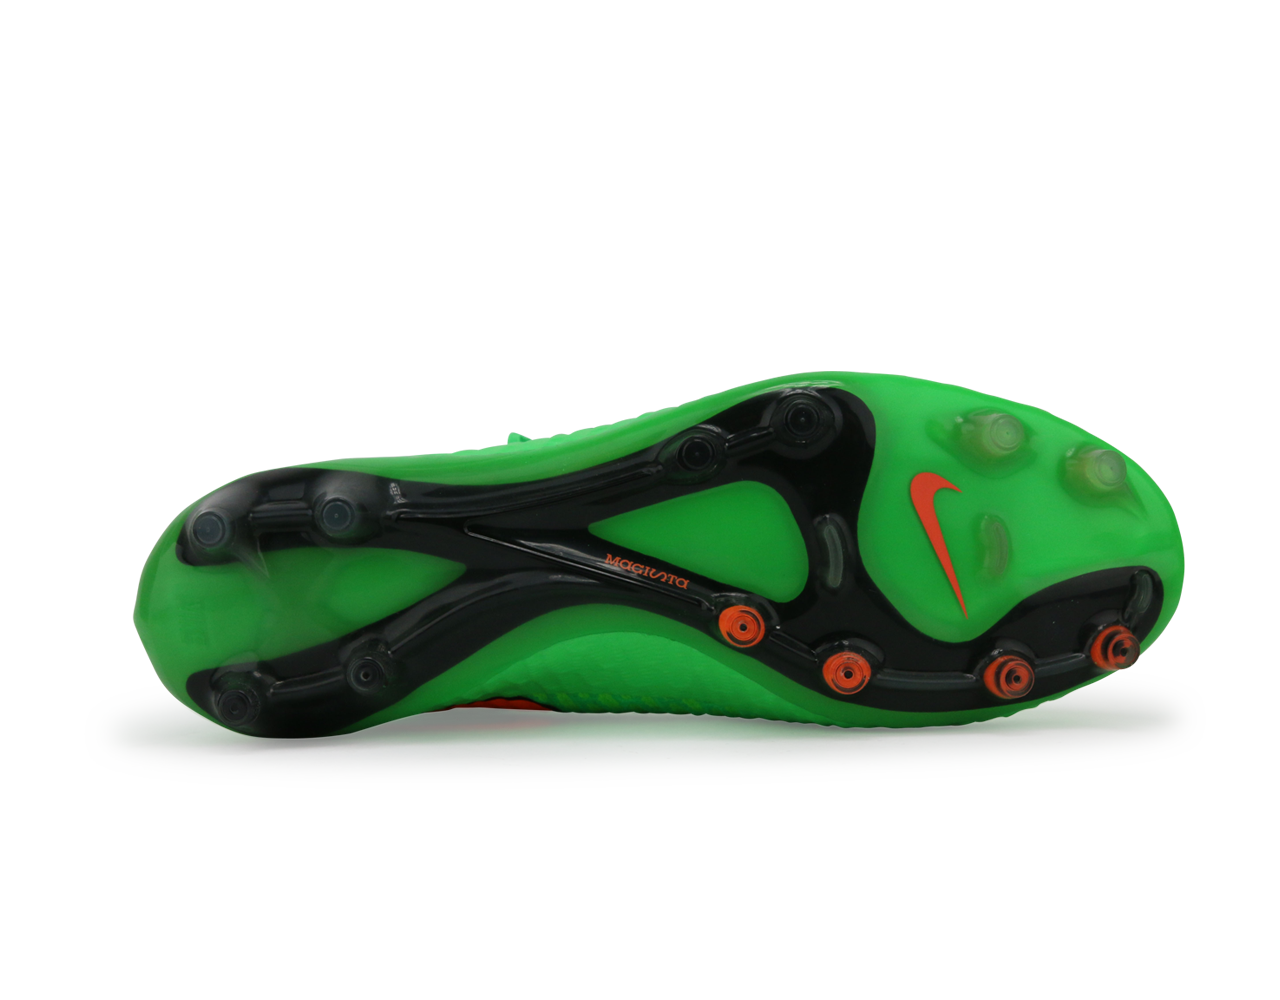 Nike Men's Magista Obra FG Posion Green/Total Orange/Flash Lime